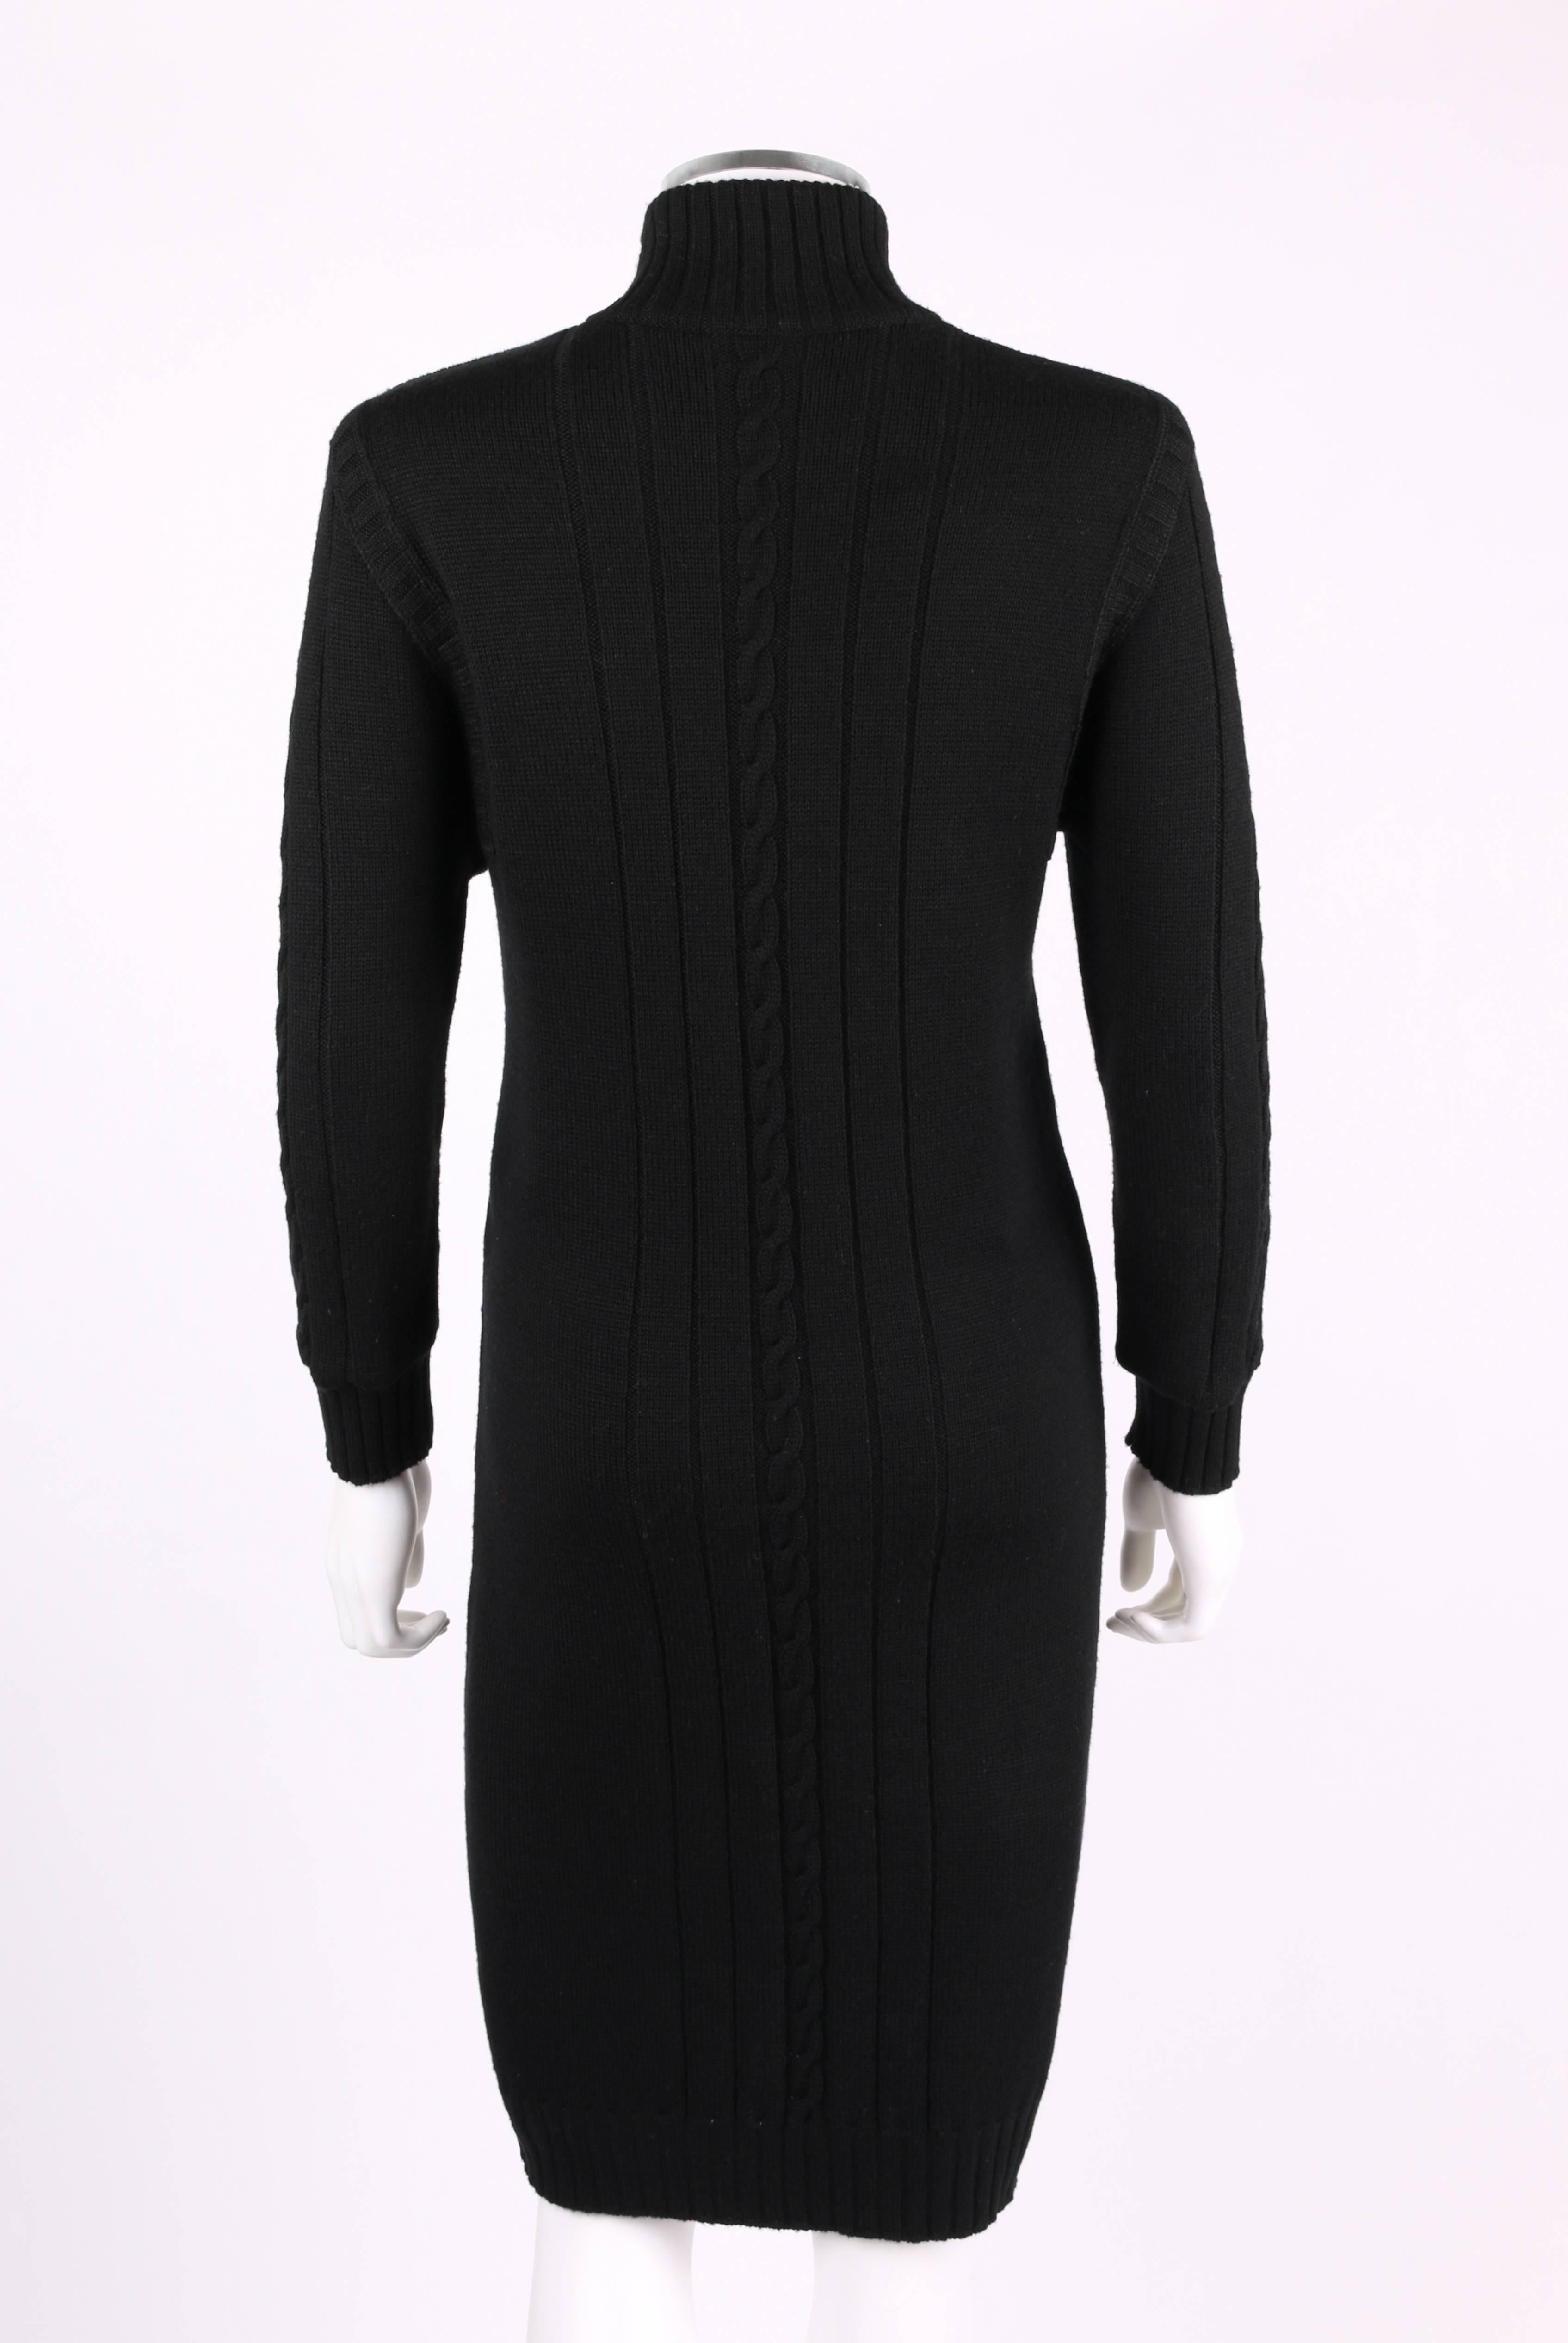 Women's COURREGES c.1980's Black Wool Cable Knit Mock Neck Sweater Dress